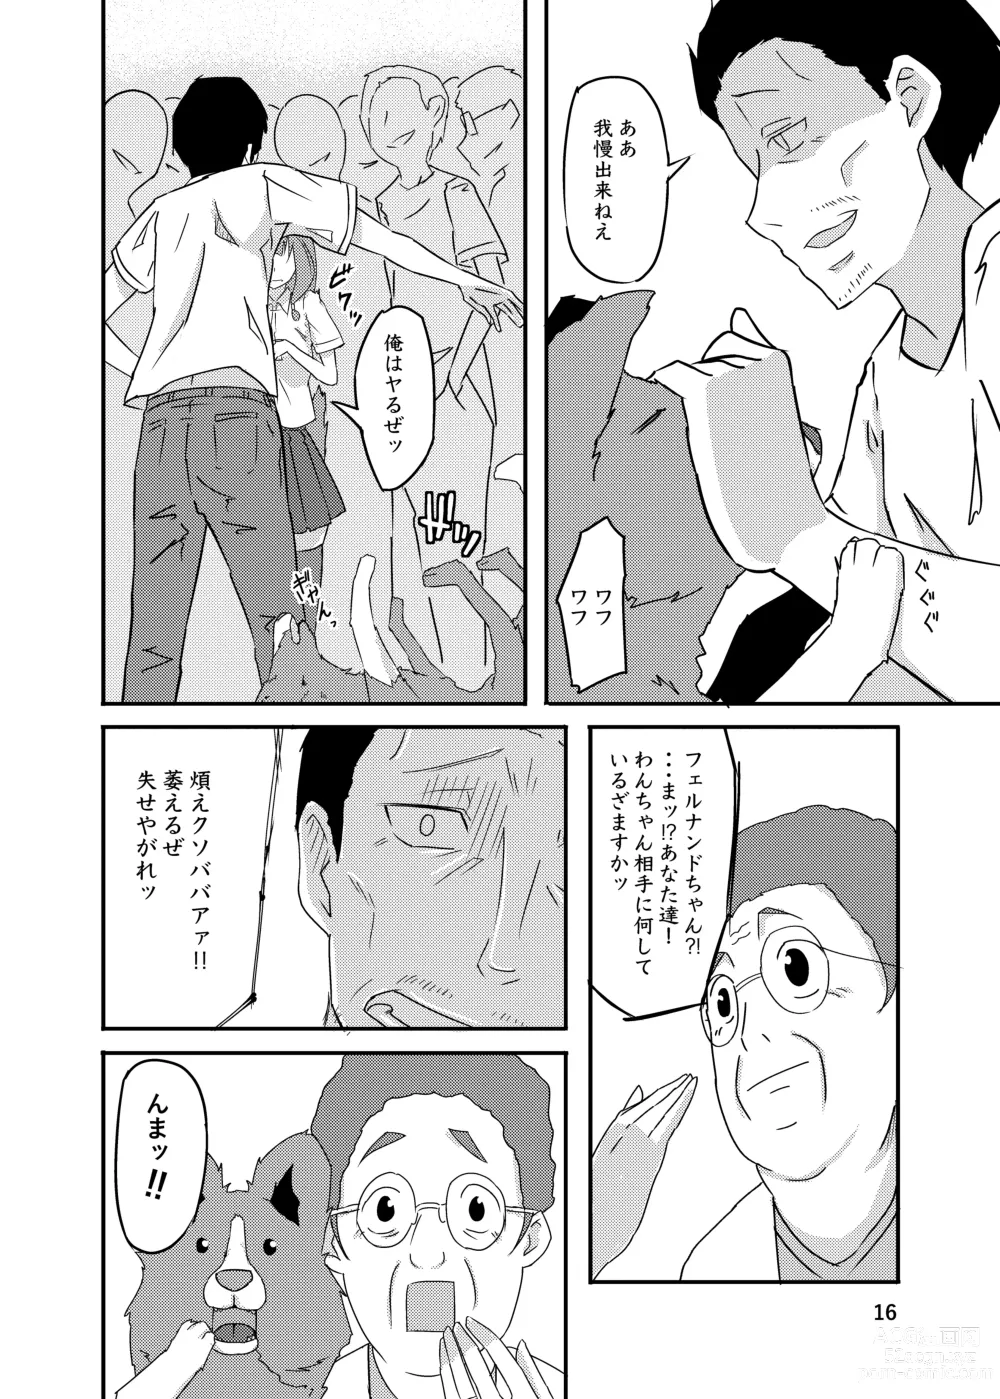 Page 16 of doujinshi Isekai kara no Juujin